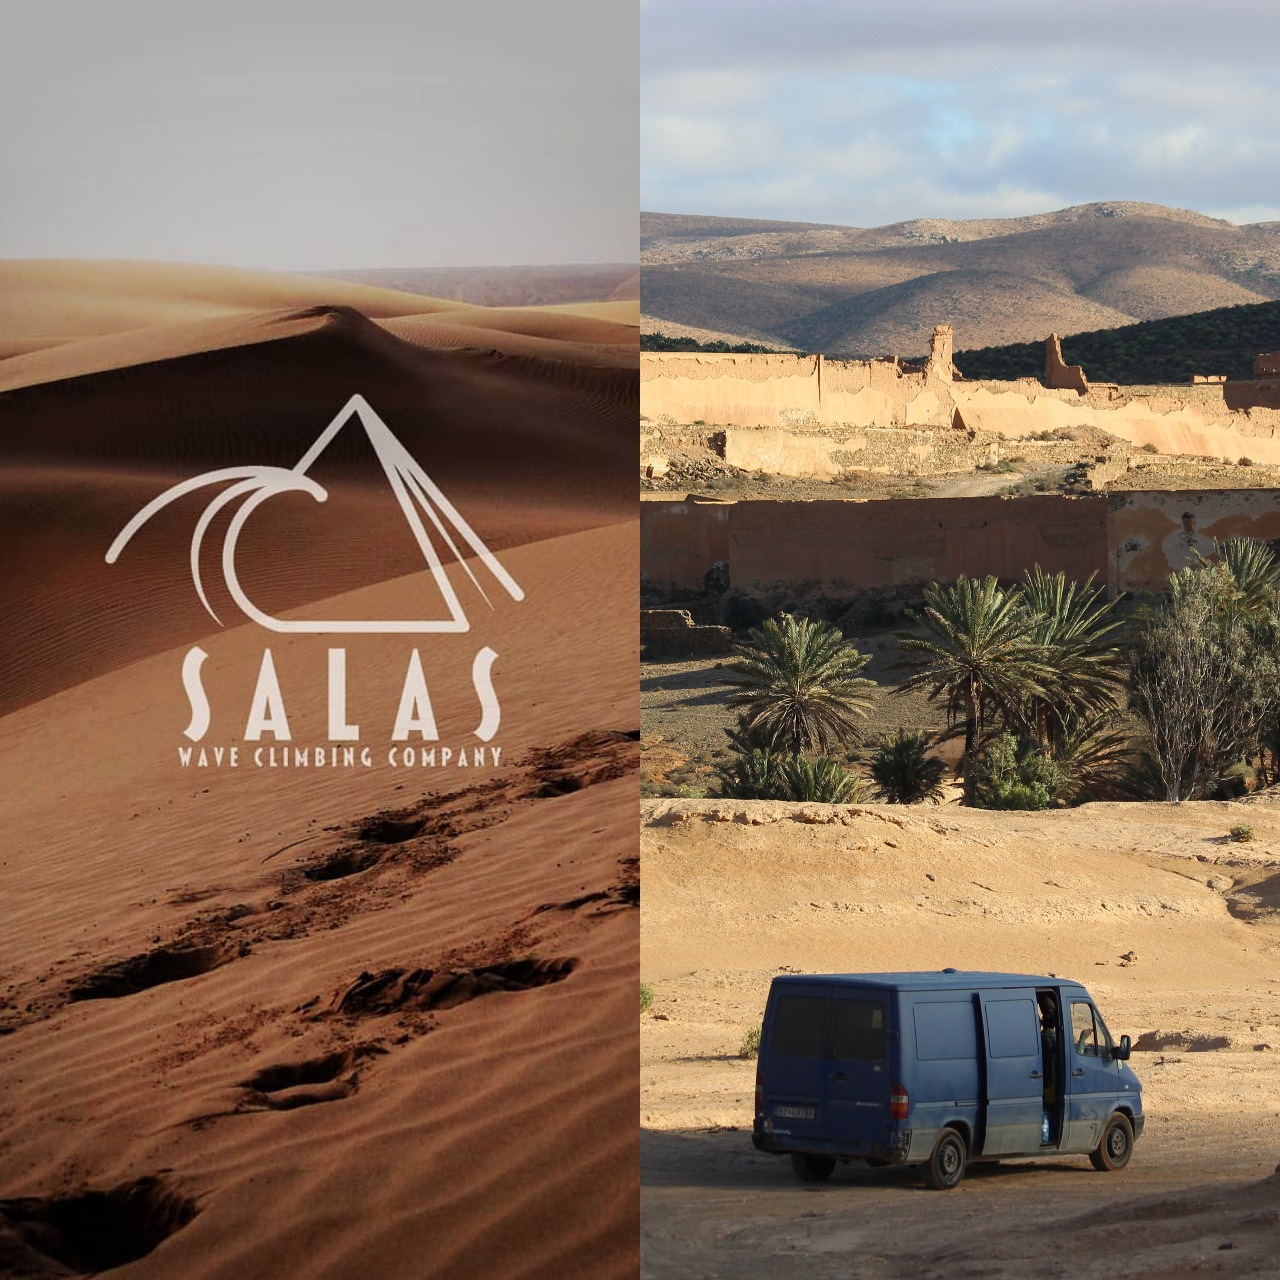 Salas waveclimbing company Maroko karavan